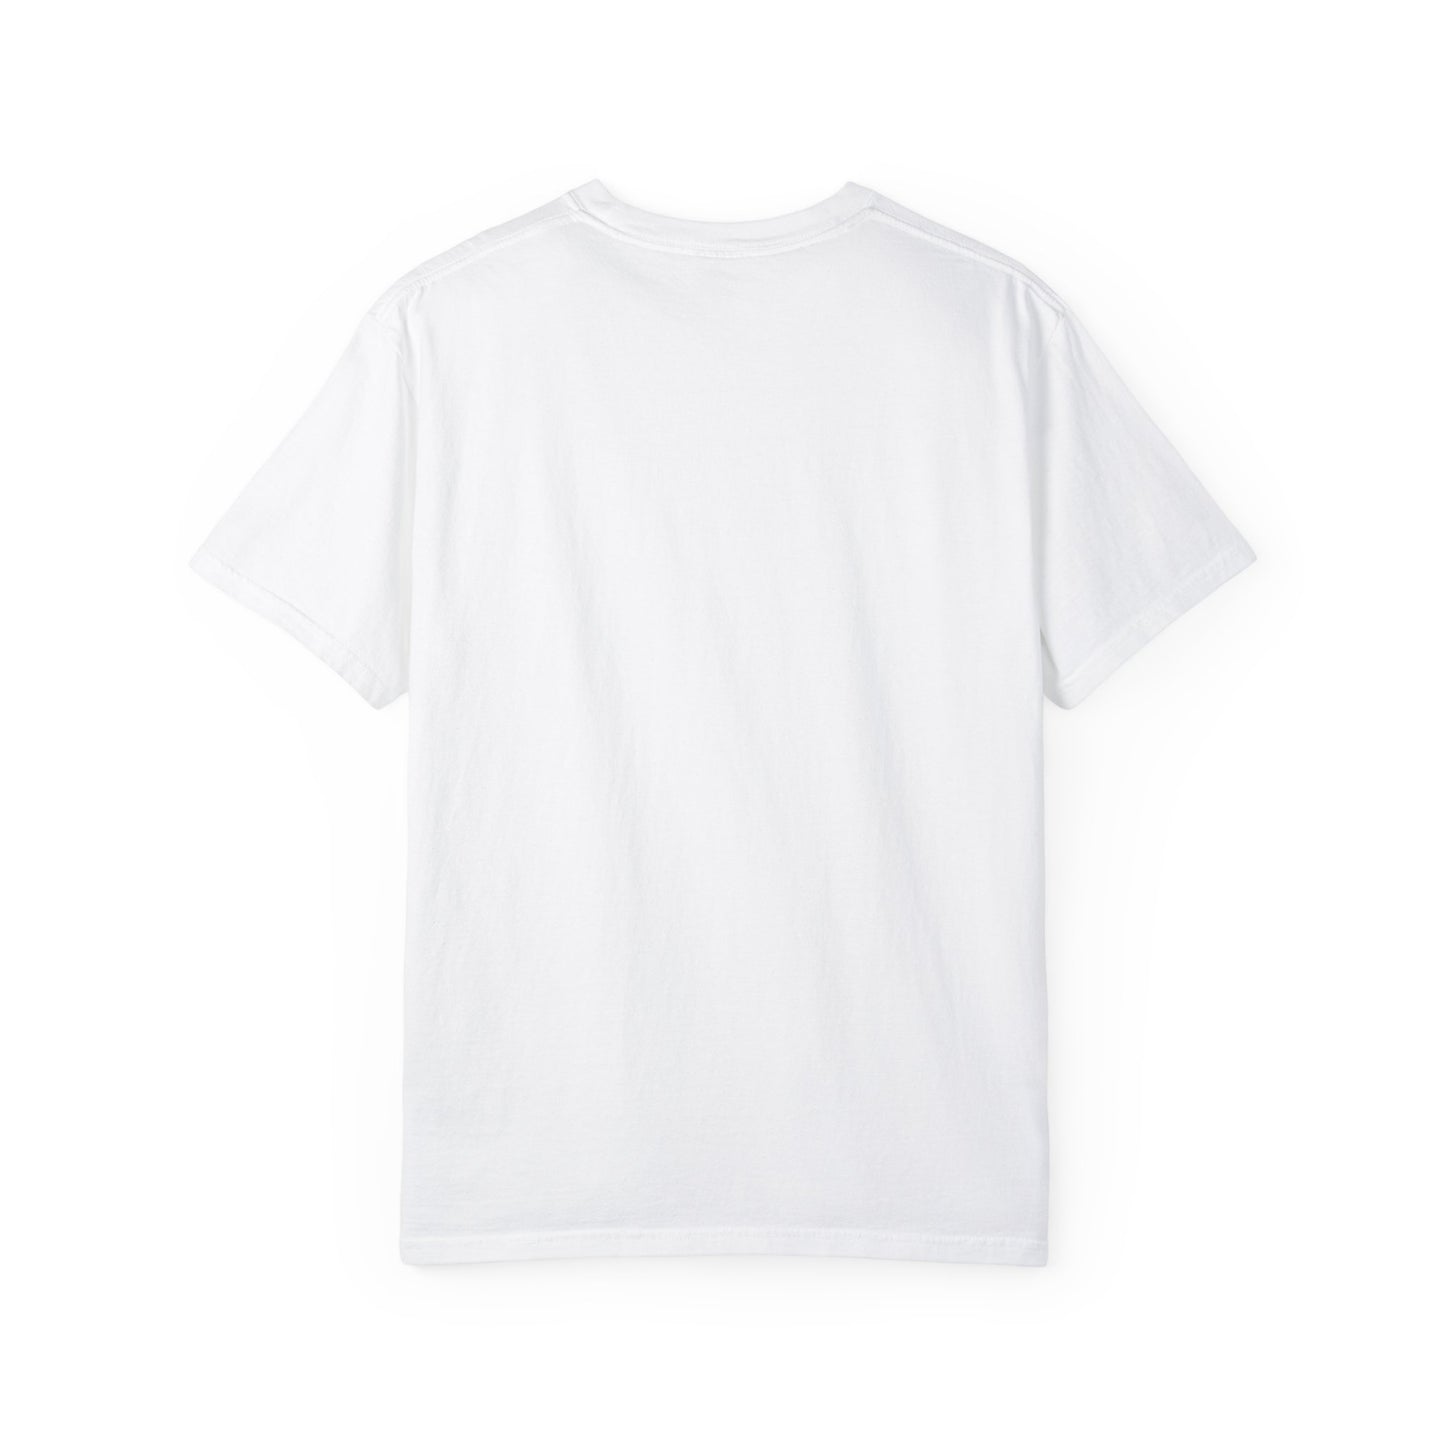 Muursic - Memphis T- Shirt